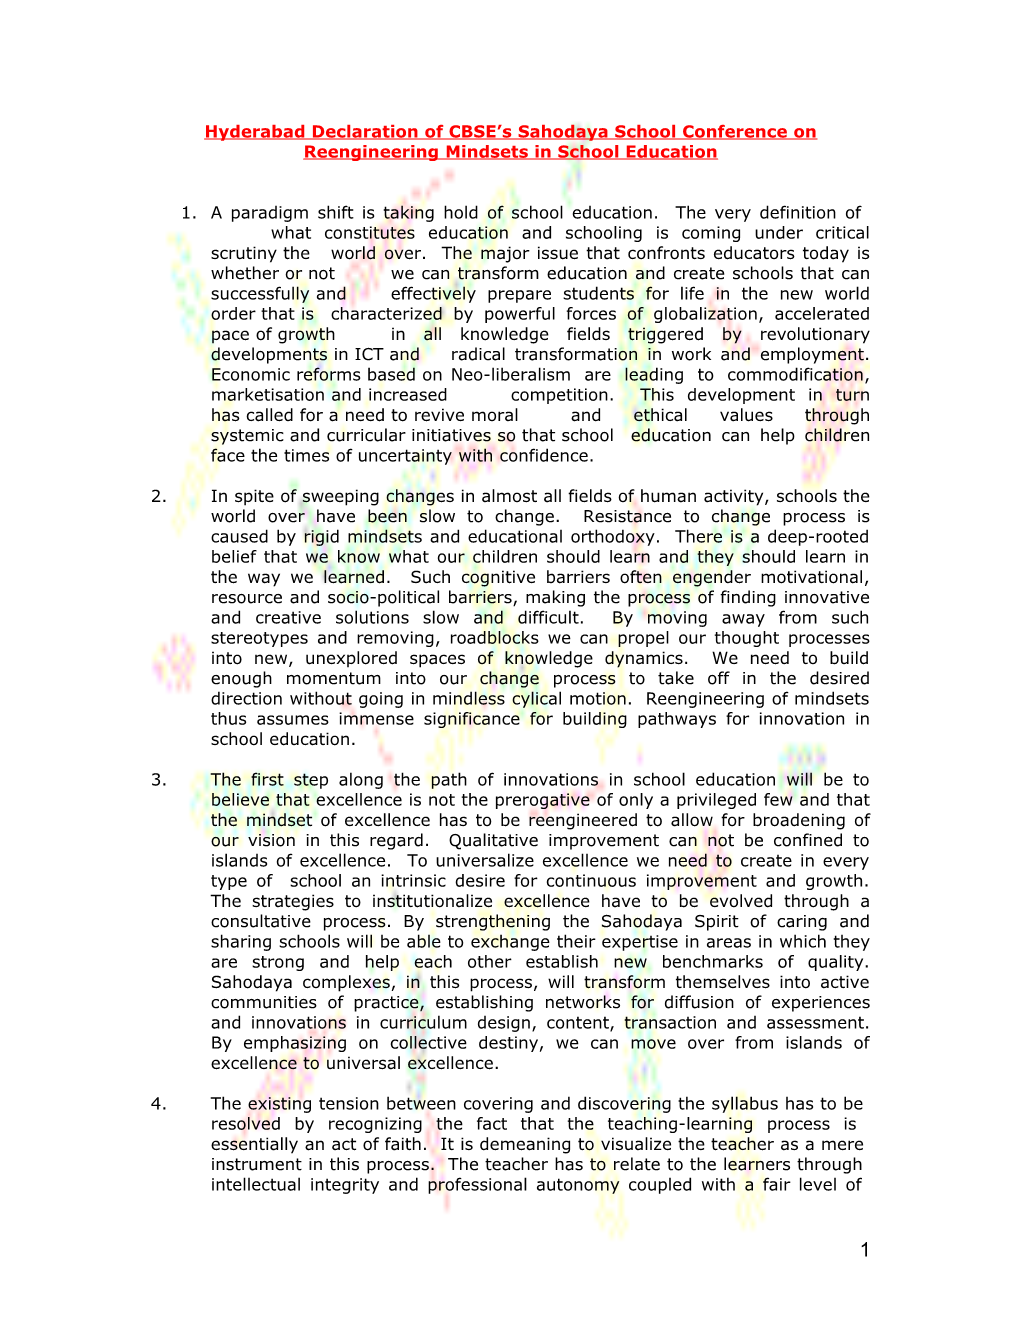 Hyderabad Declaration of CBSE S Sahodaya School Conference on Reengineering Mindsets In